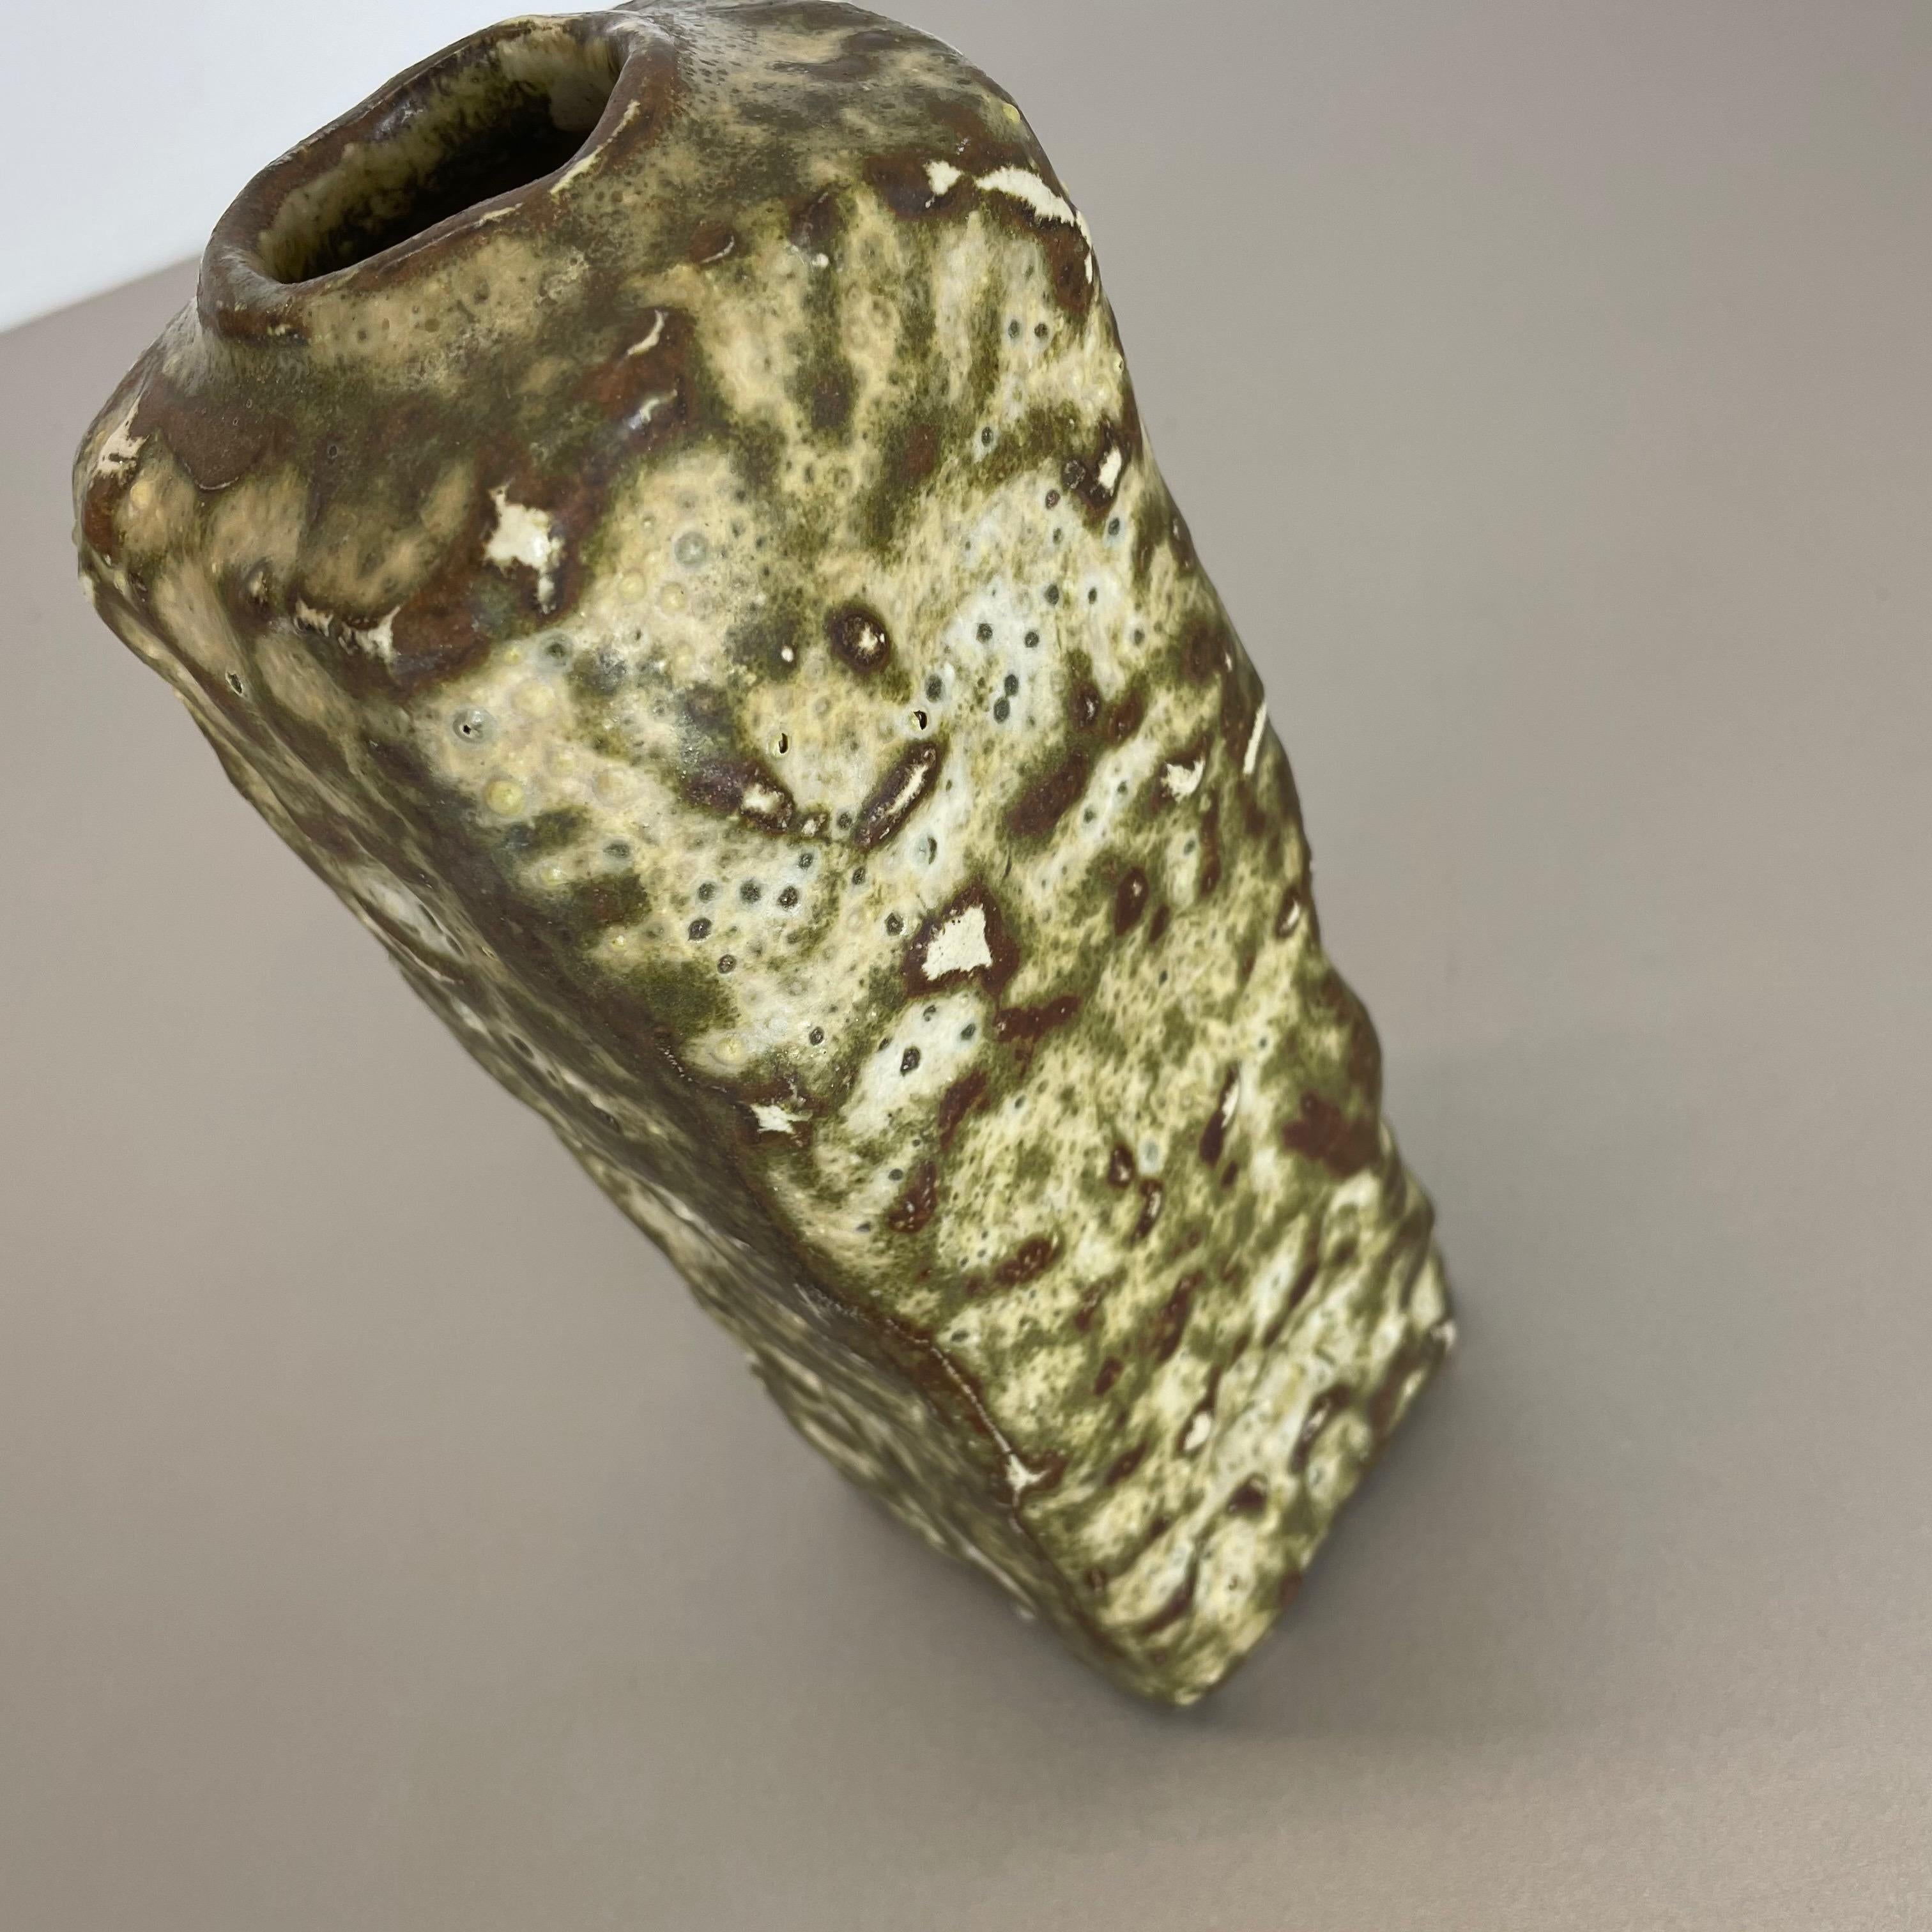 Original 1960 Ceramic Studio Pottery Vase by Piet Knepper for Mobach Netherlands For Sale 9